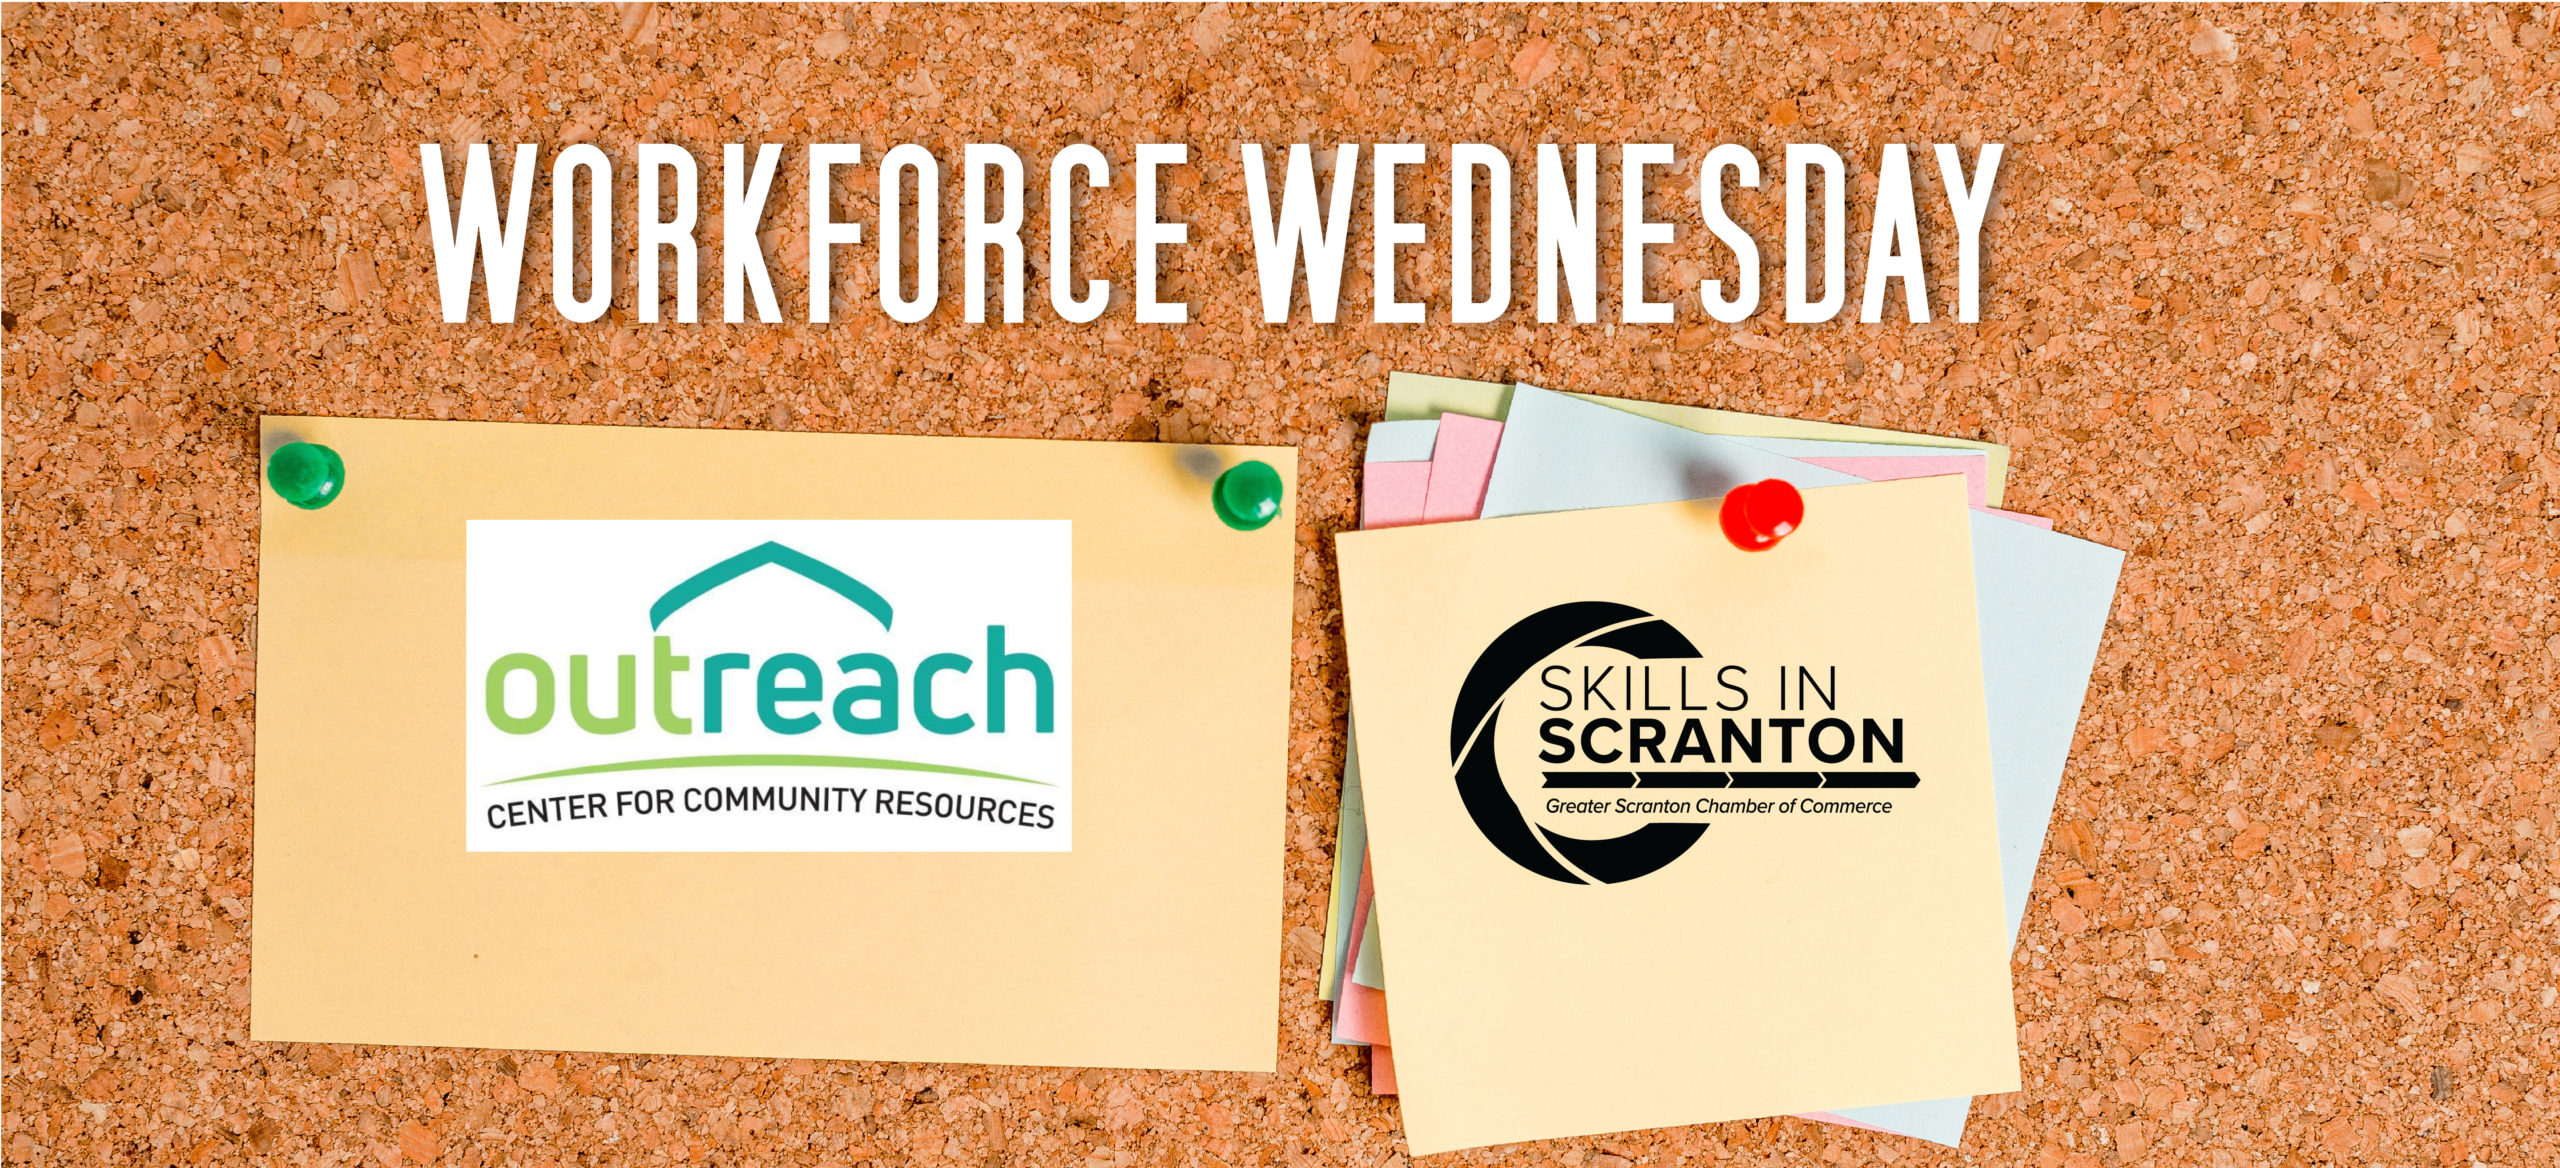 Workforce Wednesday: Outreach